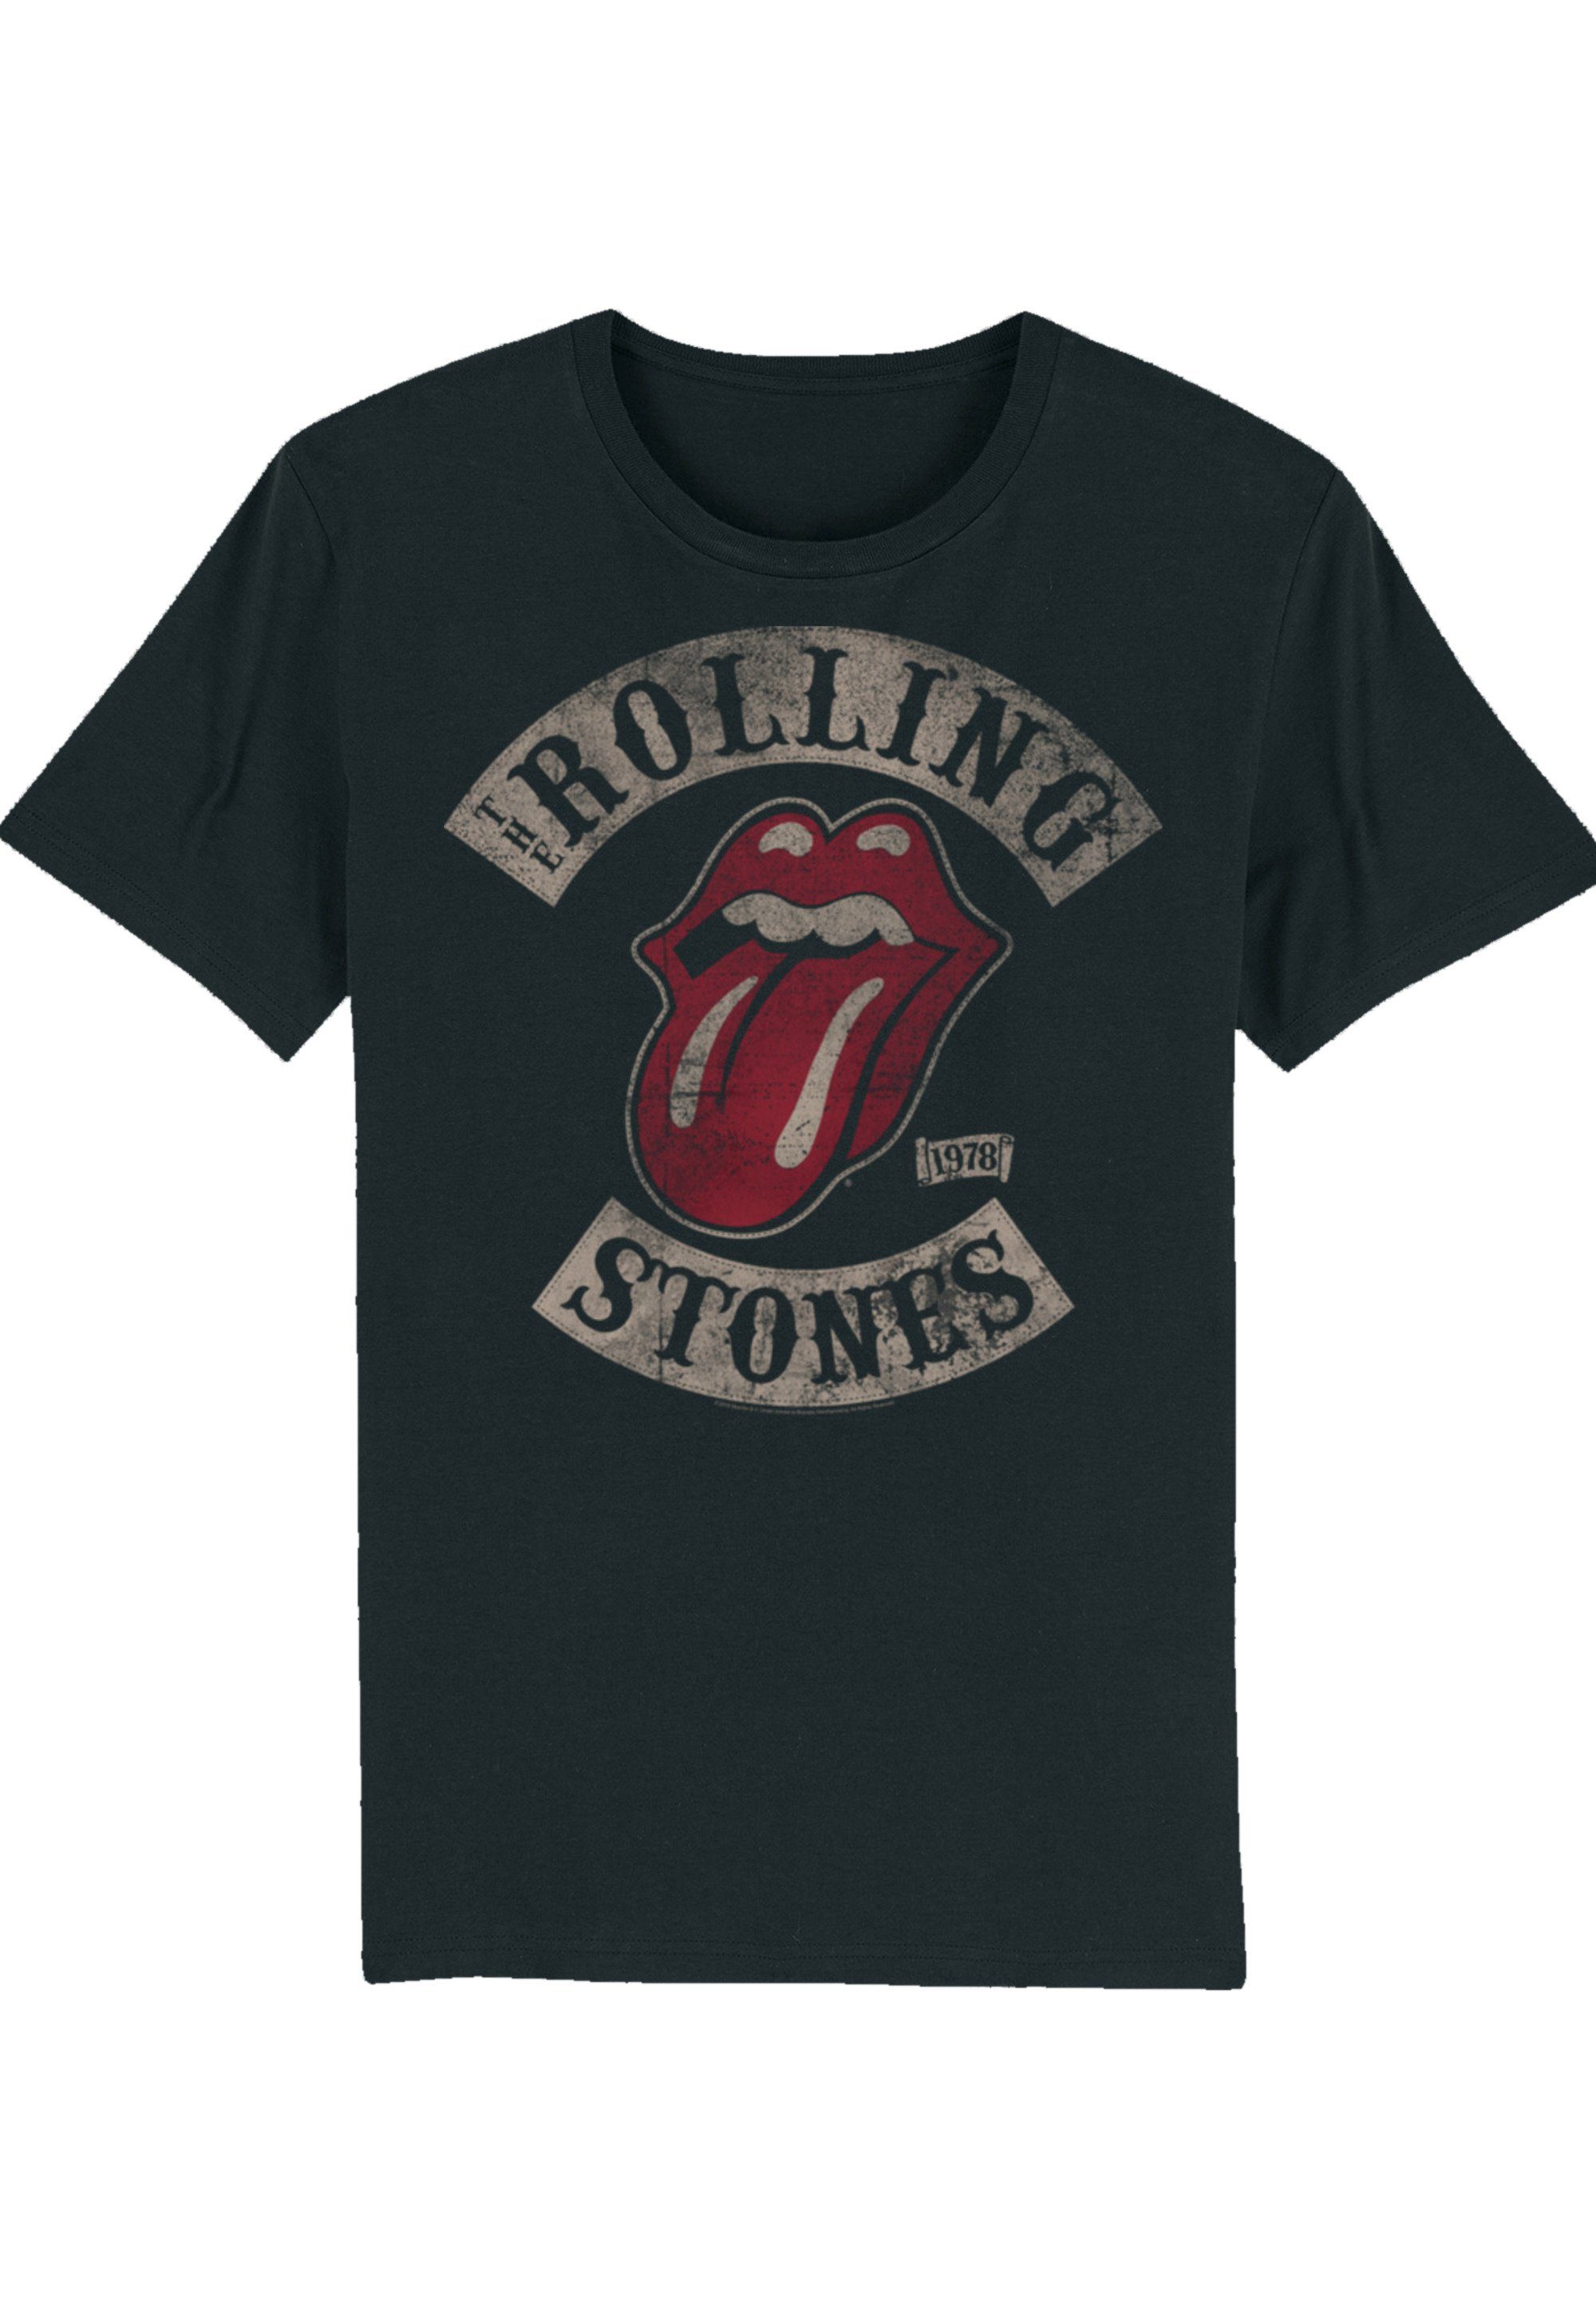 F4NT4STIC T-Shirt The Rolling Stones vielseitig kombinierbar Print, \'78 und Komfortabel Tour